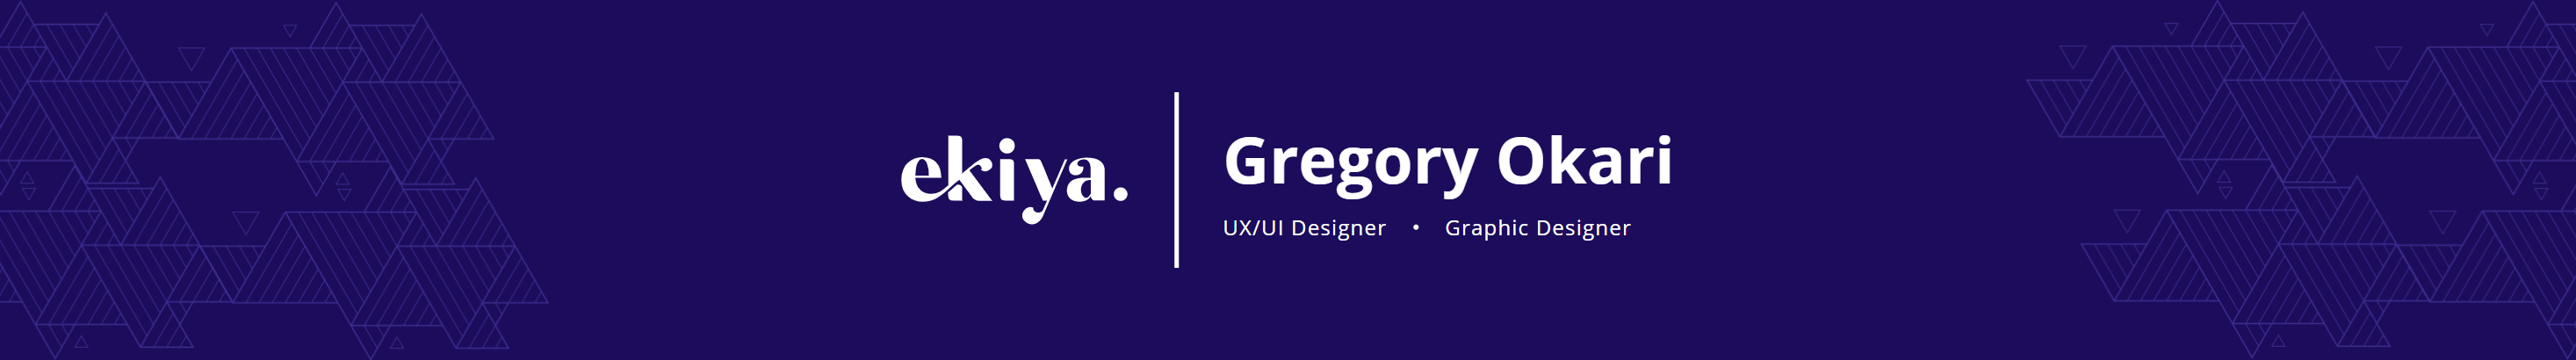 Gregory Okari's profile banner